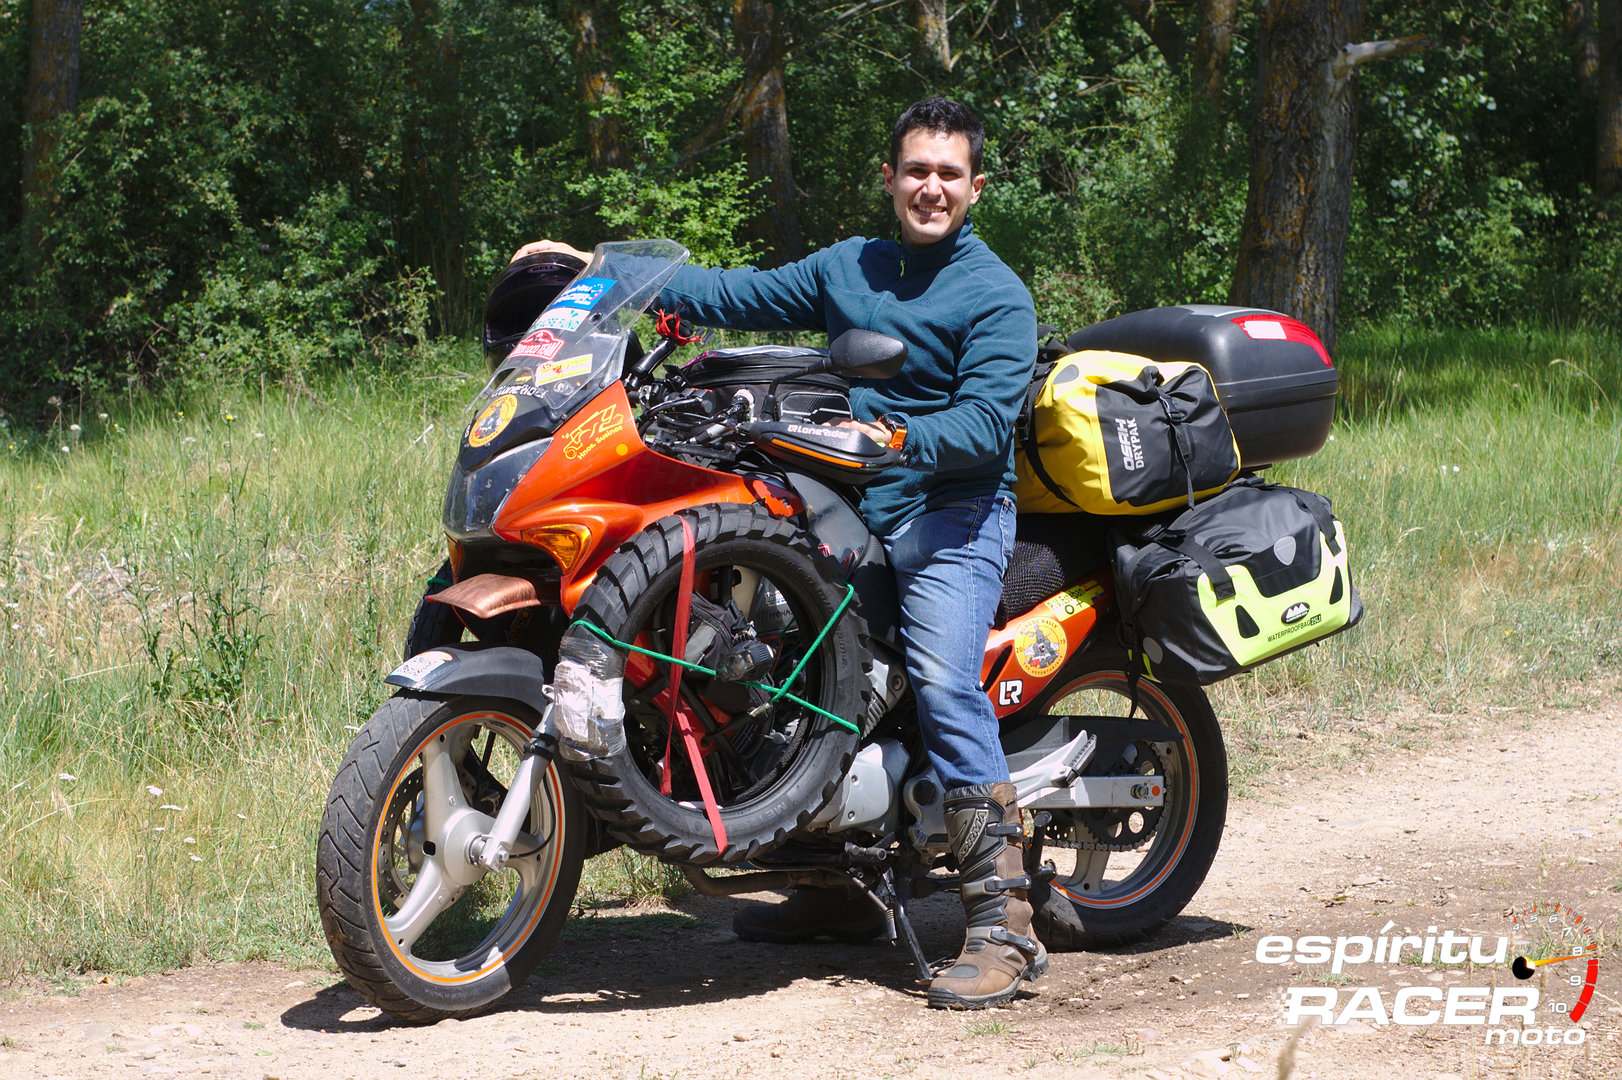 Pedro a Mongolia espirituRACER moto 01